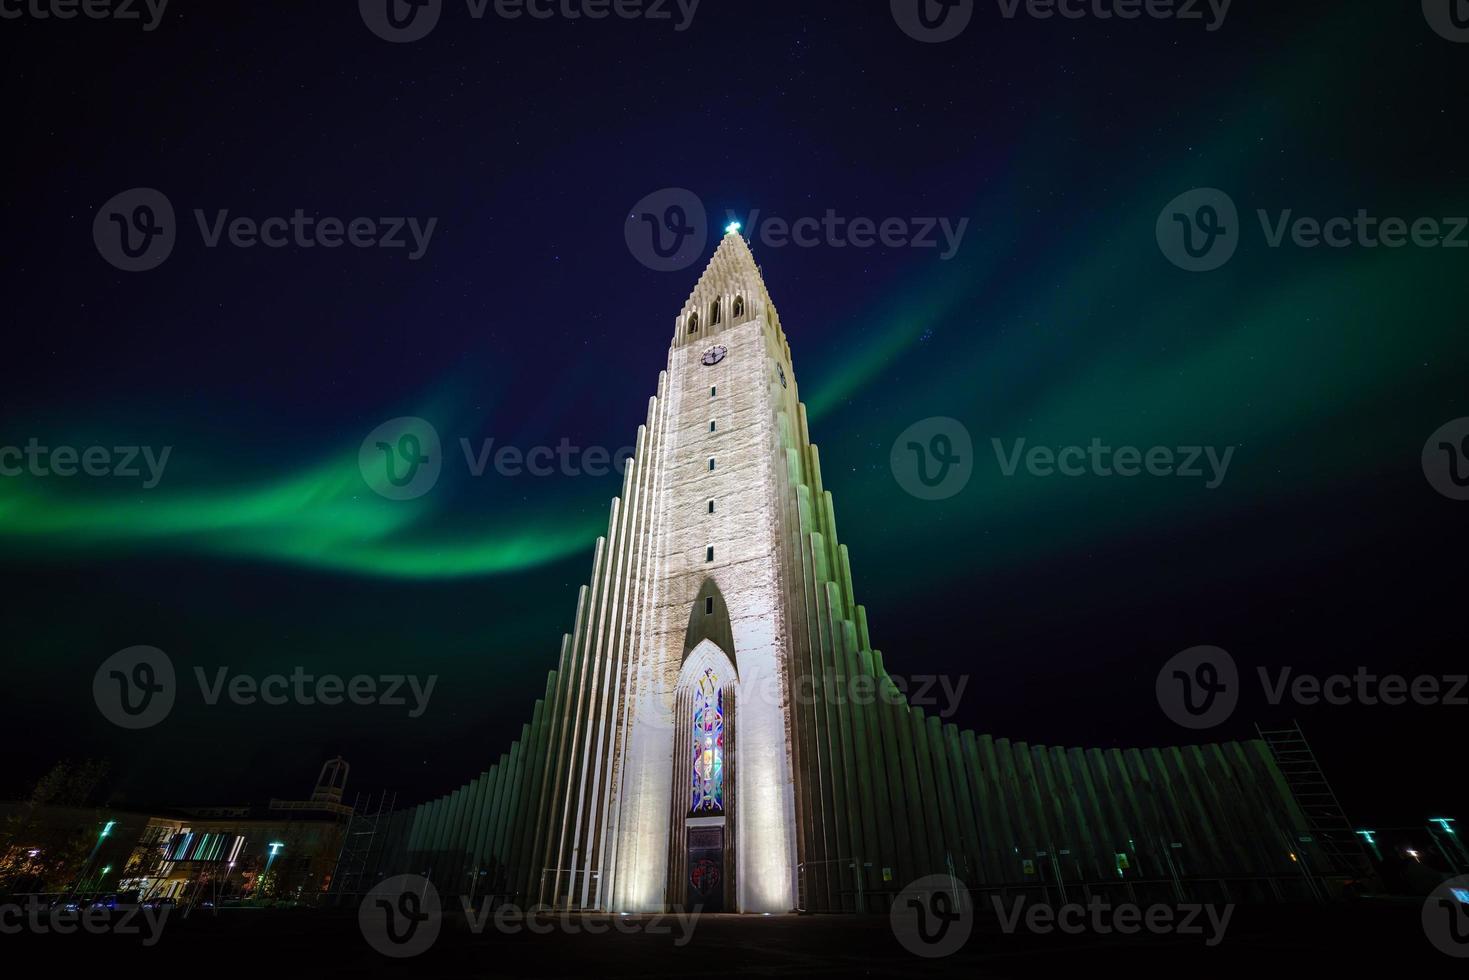 l'aurora boreale splende sulla chiesa di reykjavik foto